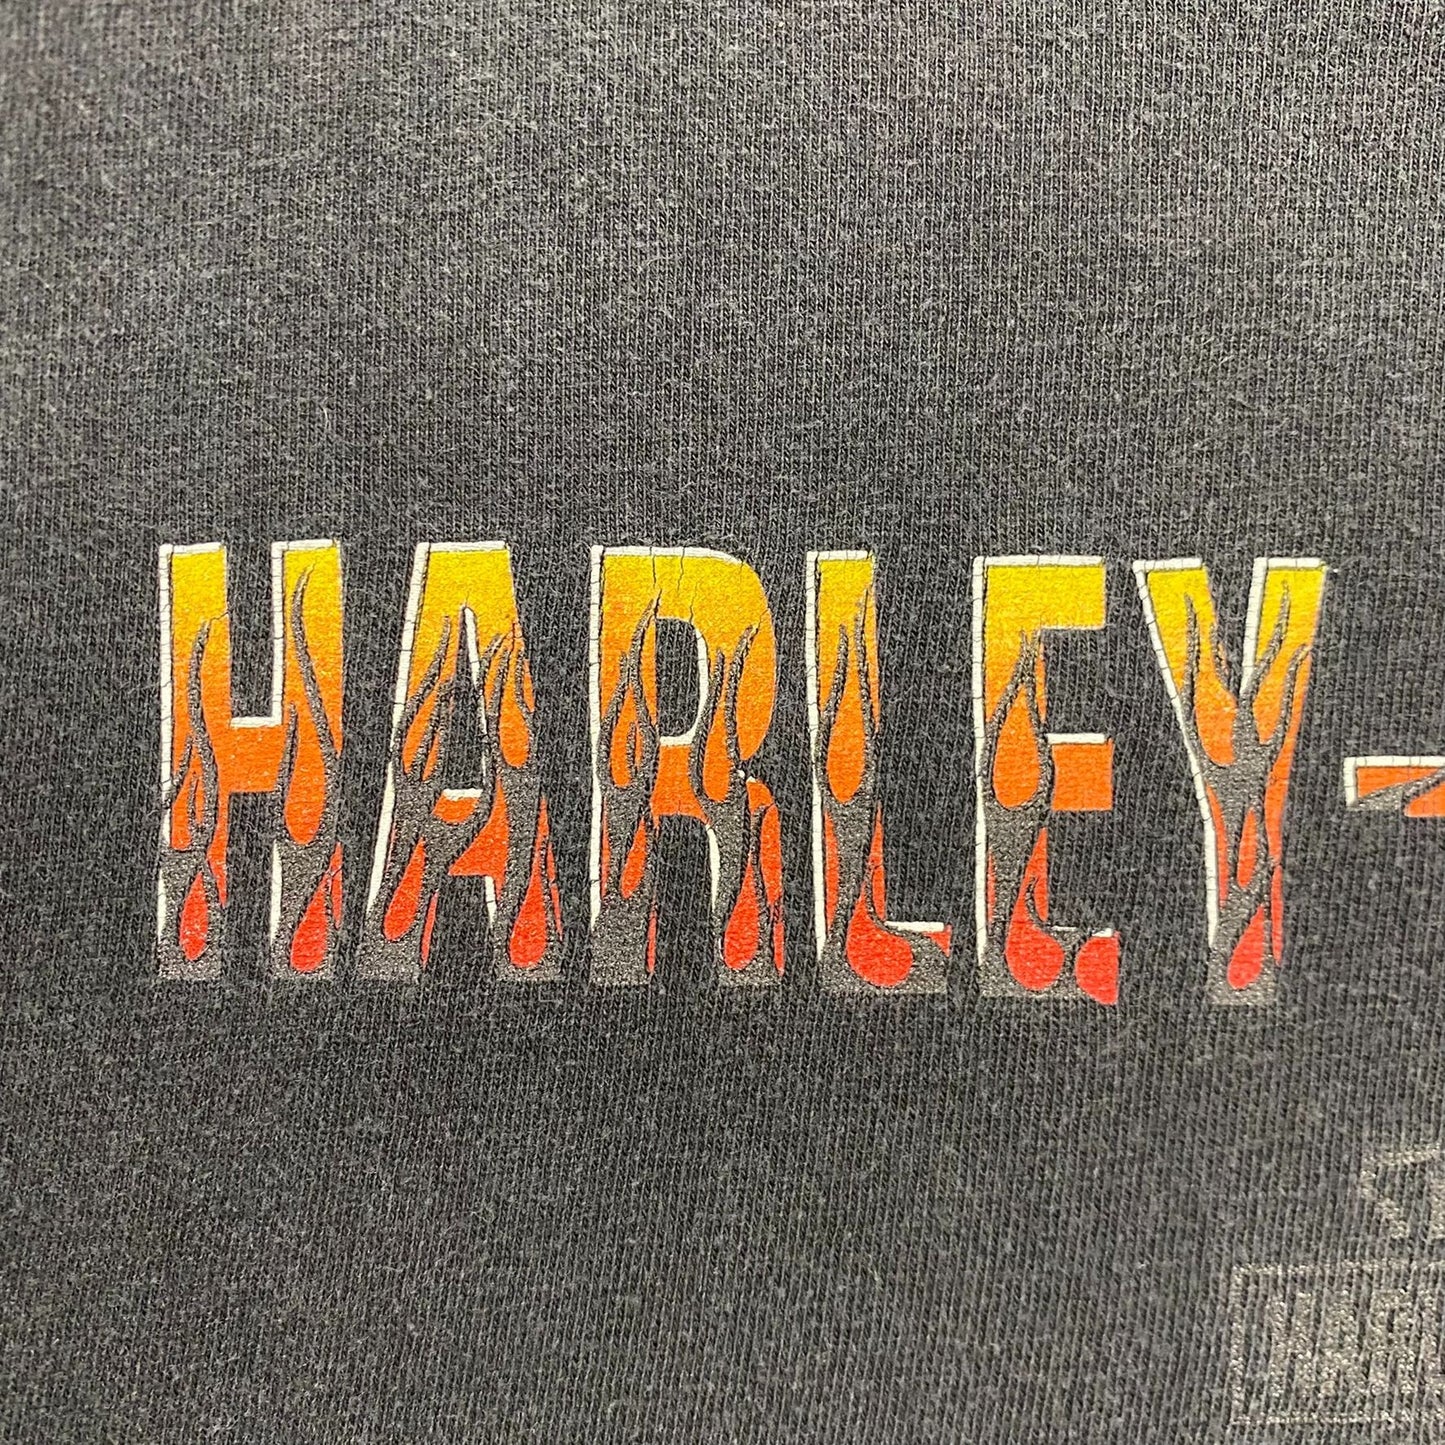 Vintage 90s Sun Faded Essential Harley Davidson T-Shirt